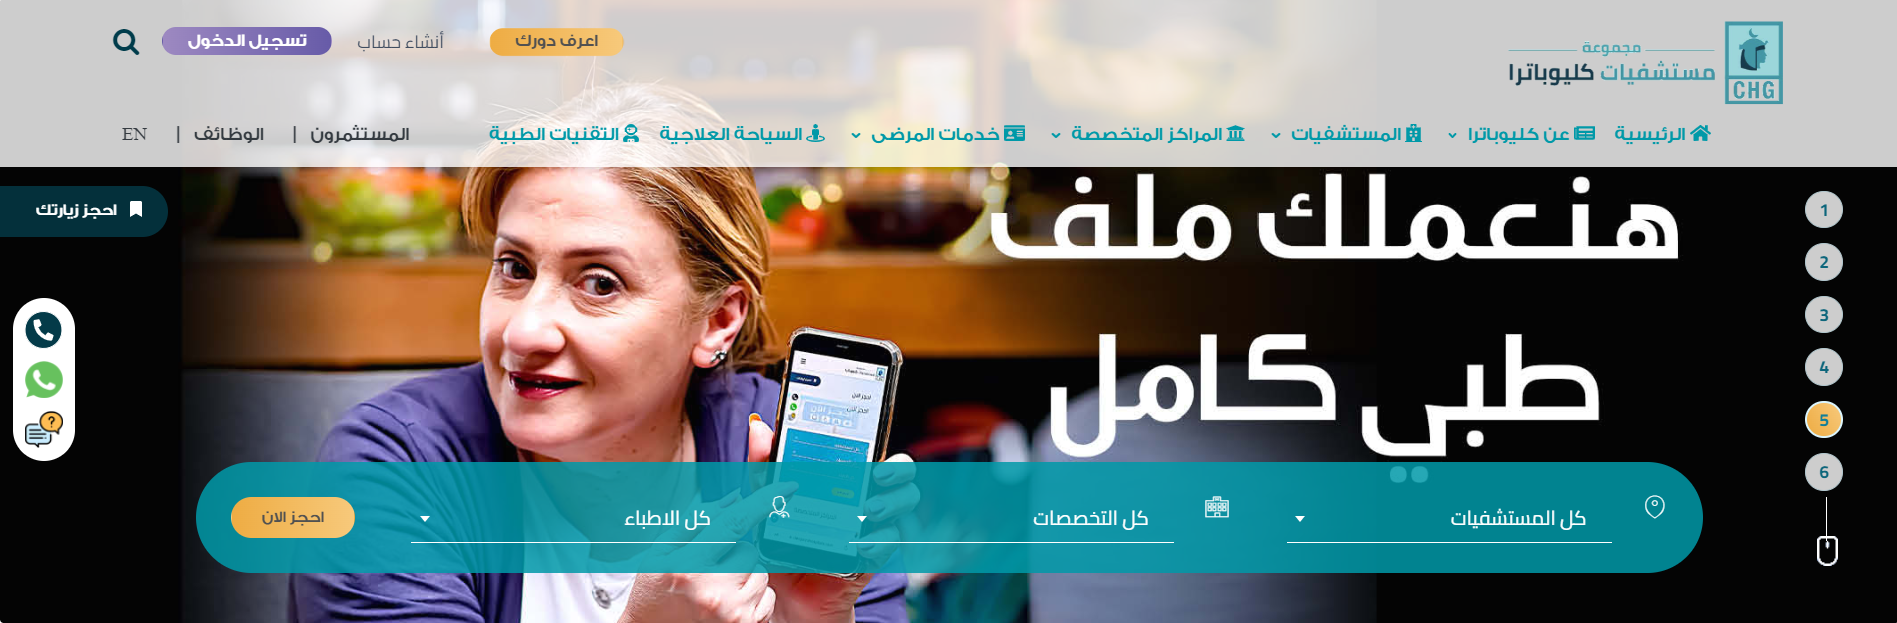 NetWave | Web design, development & online solutions - Egypt